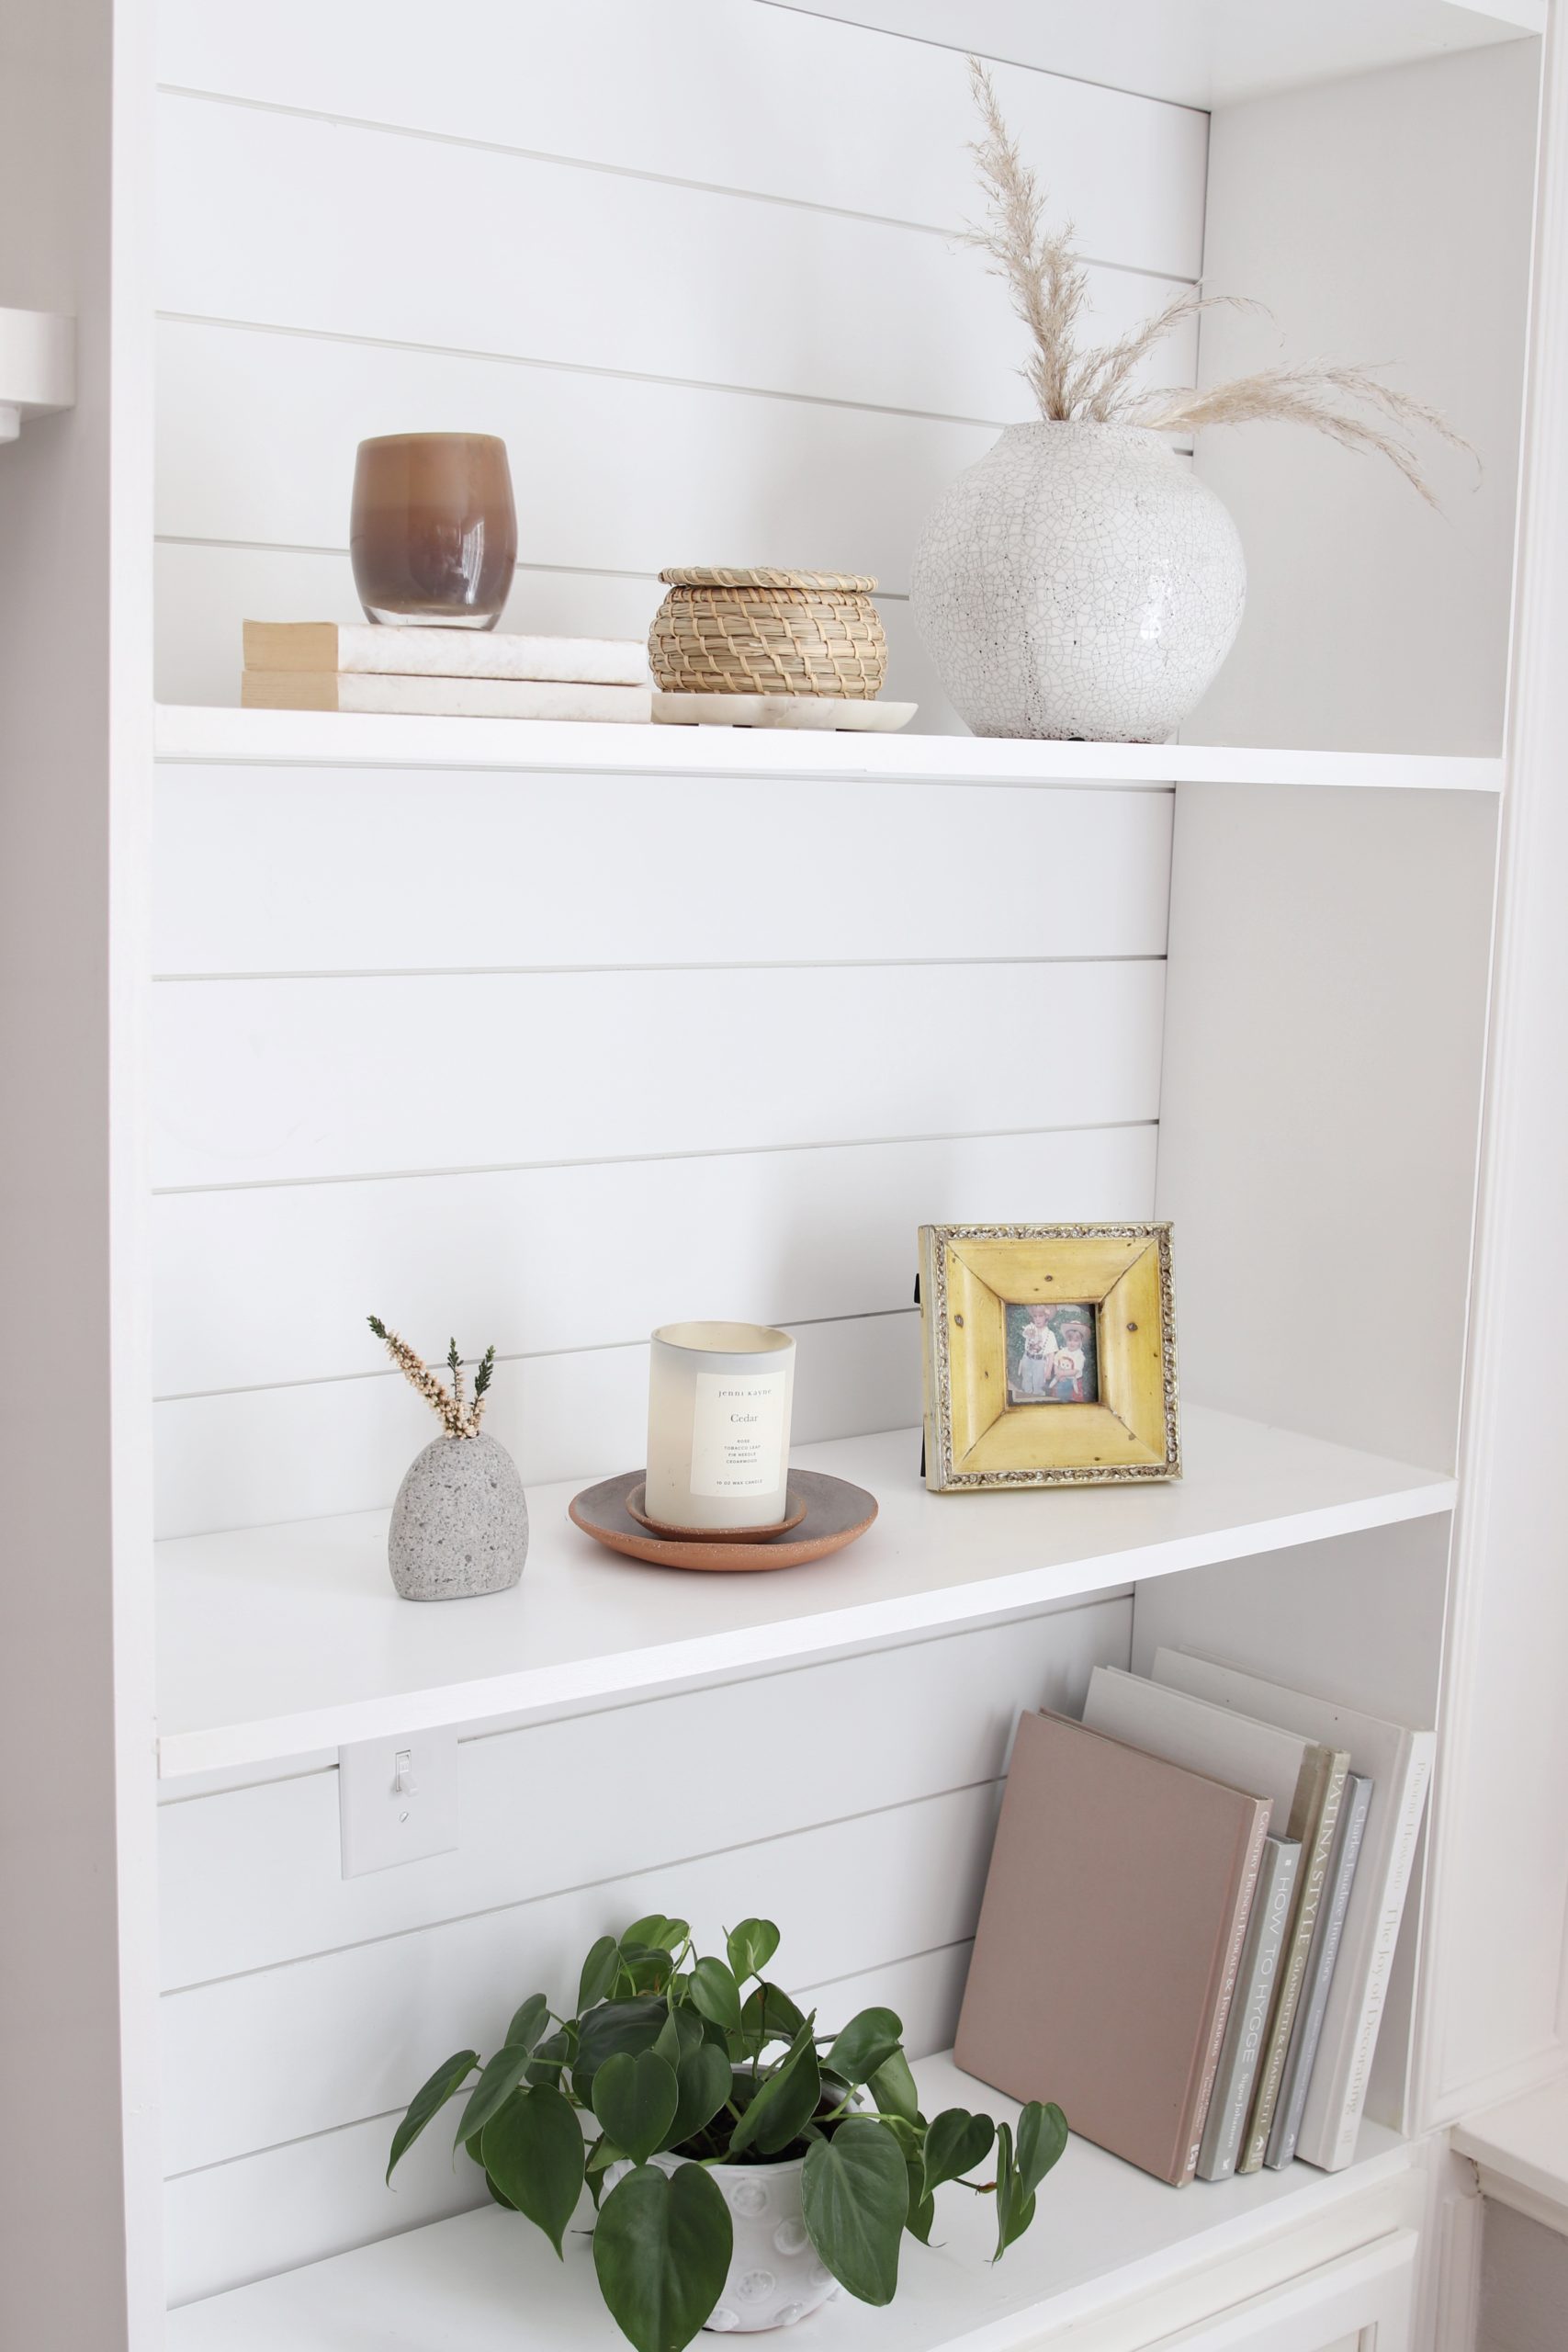 How to style your shelves - Lemon Grove Lane